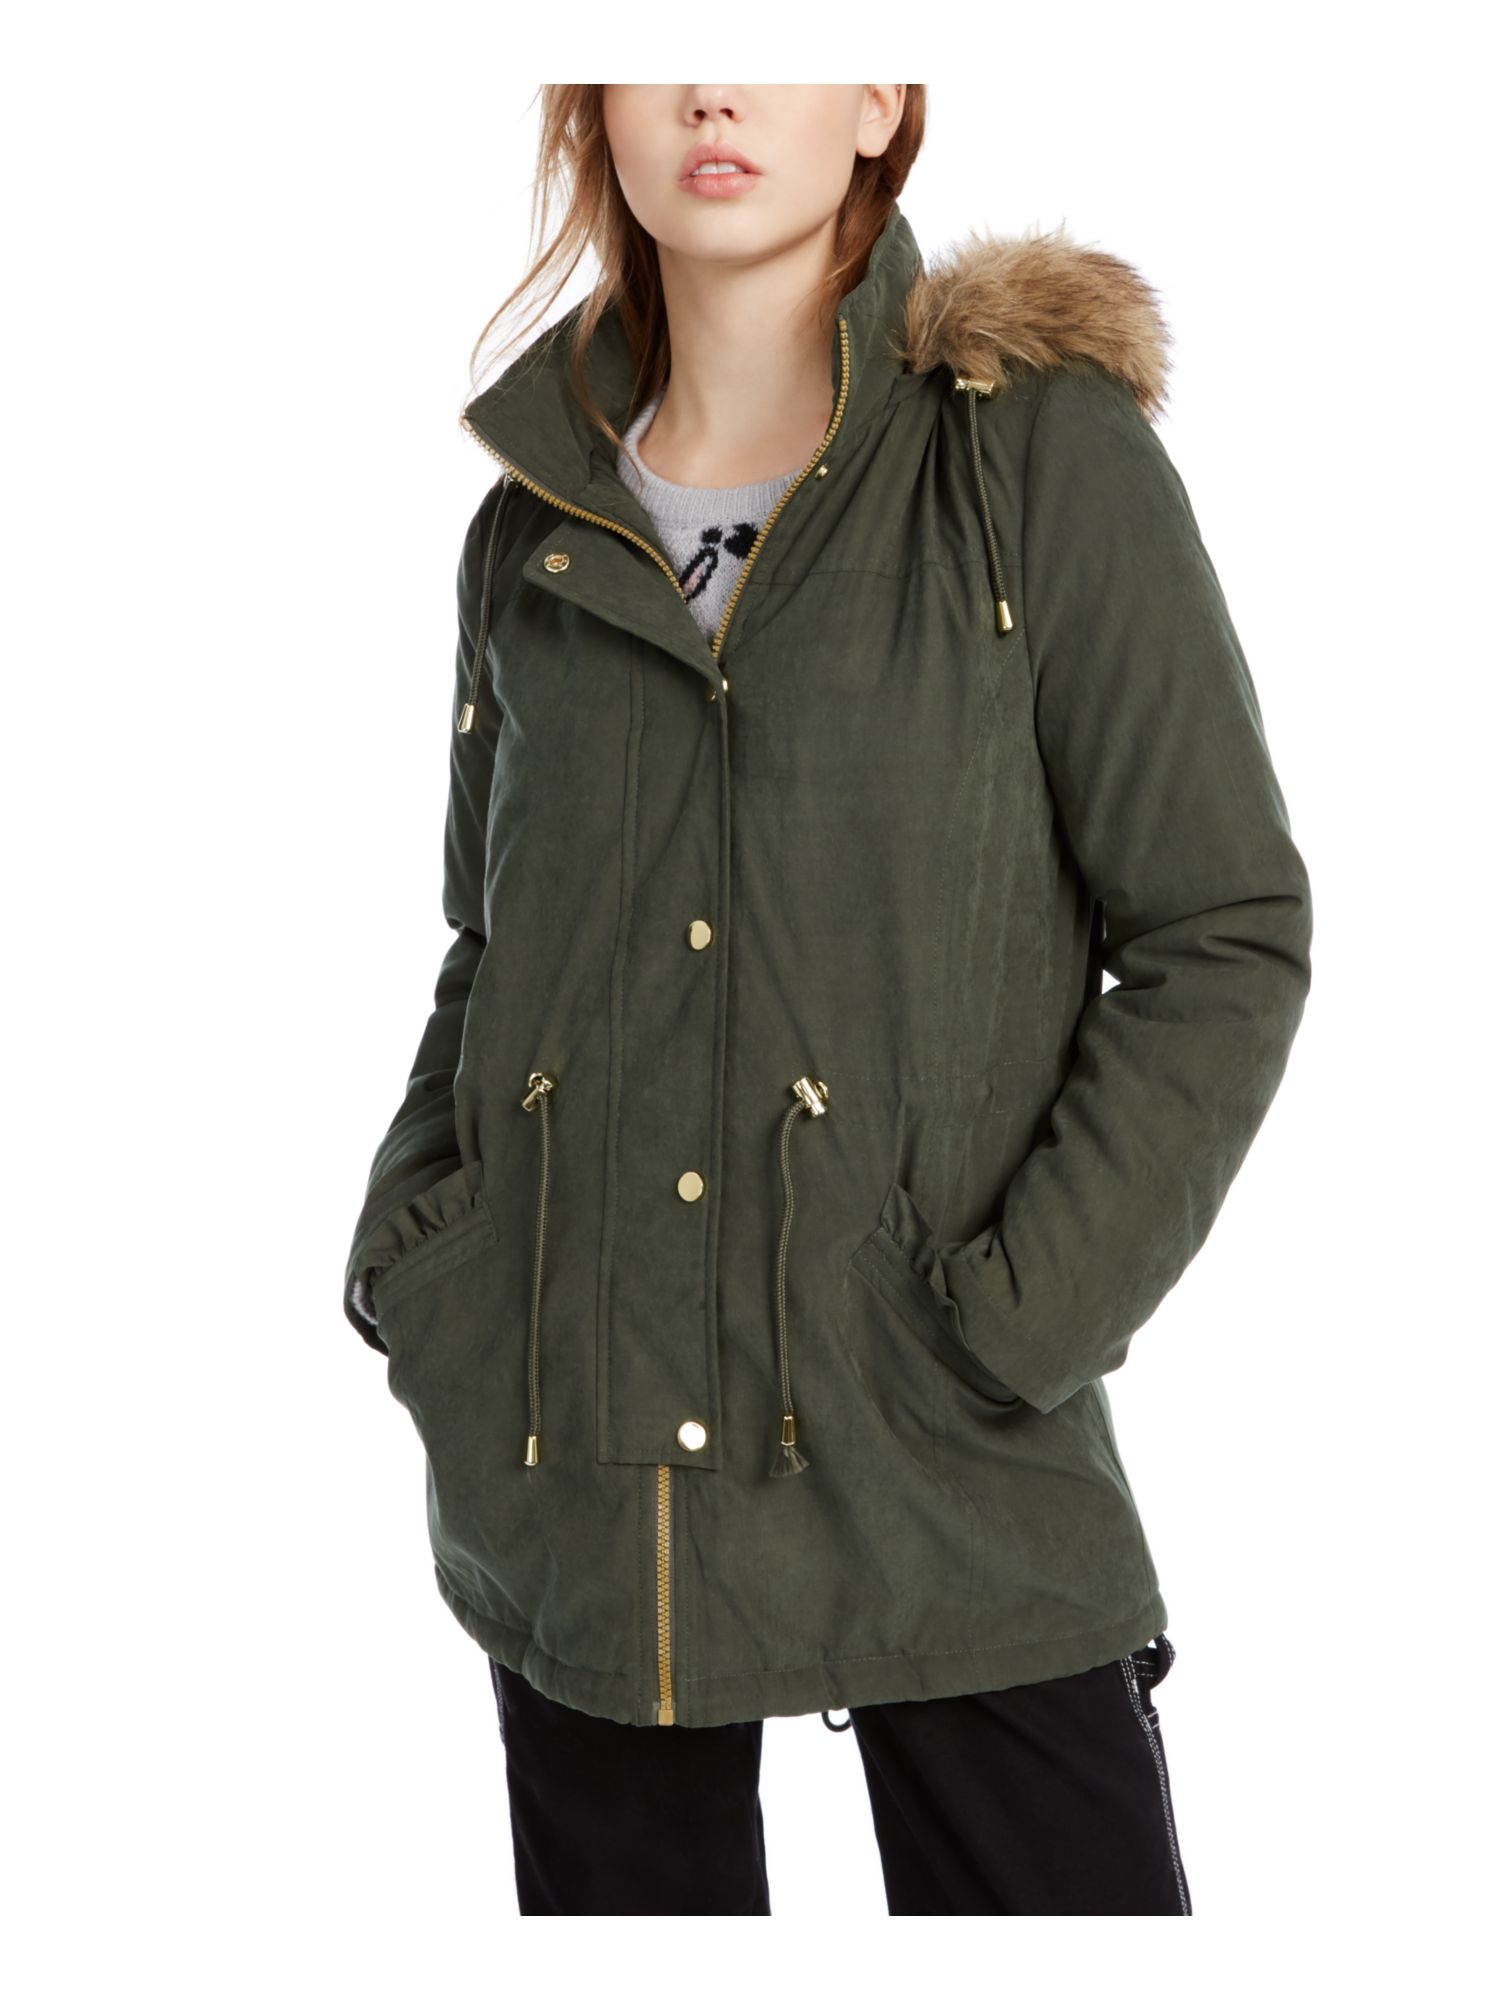 CELEBRITY PINK Womens Green Faux Fur Hood Parka Winter Jacket Coat Juniors L - image 1 of 2